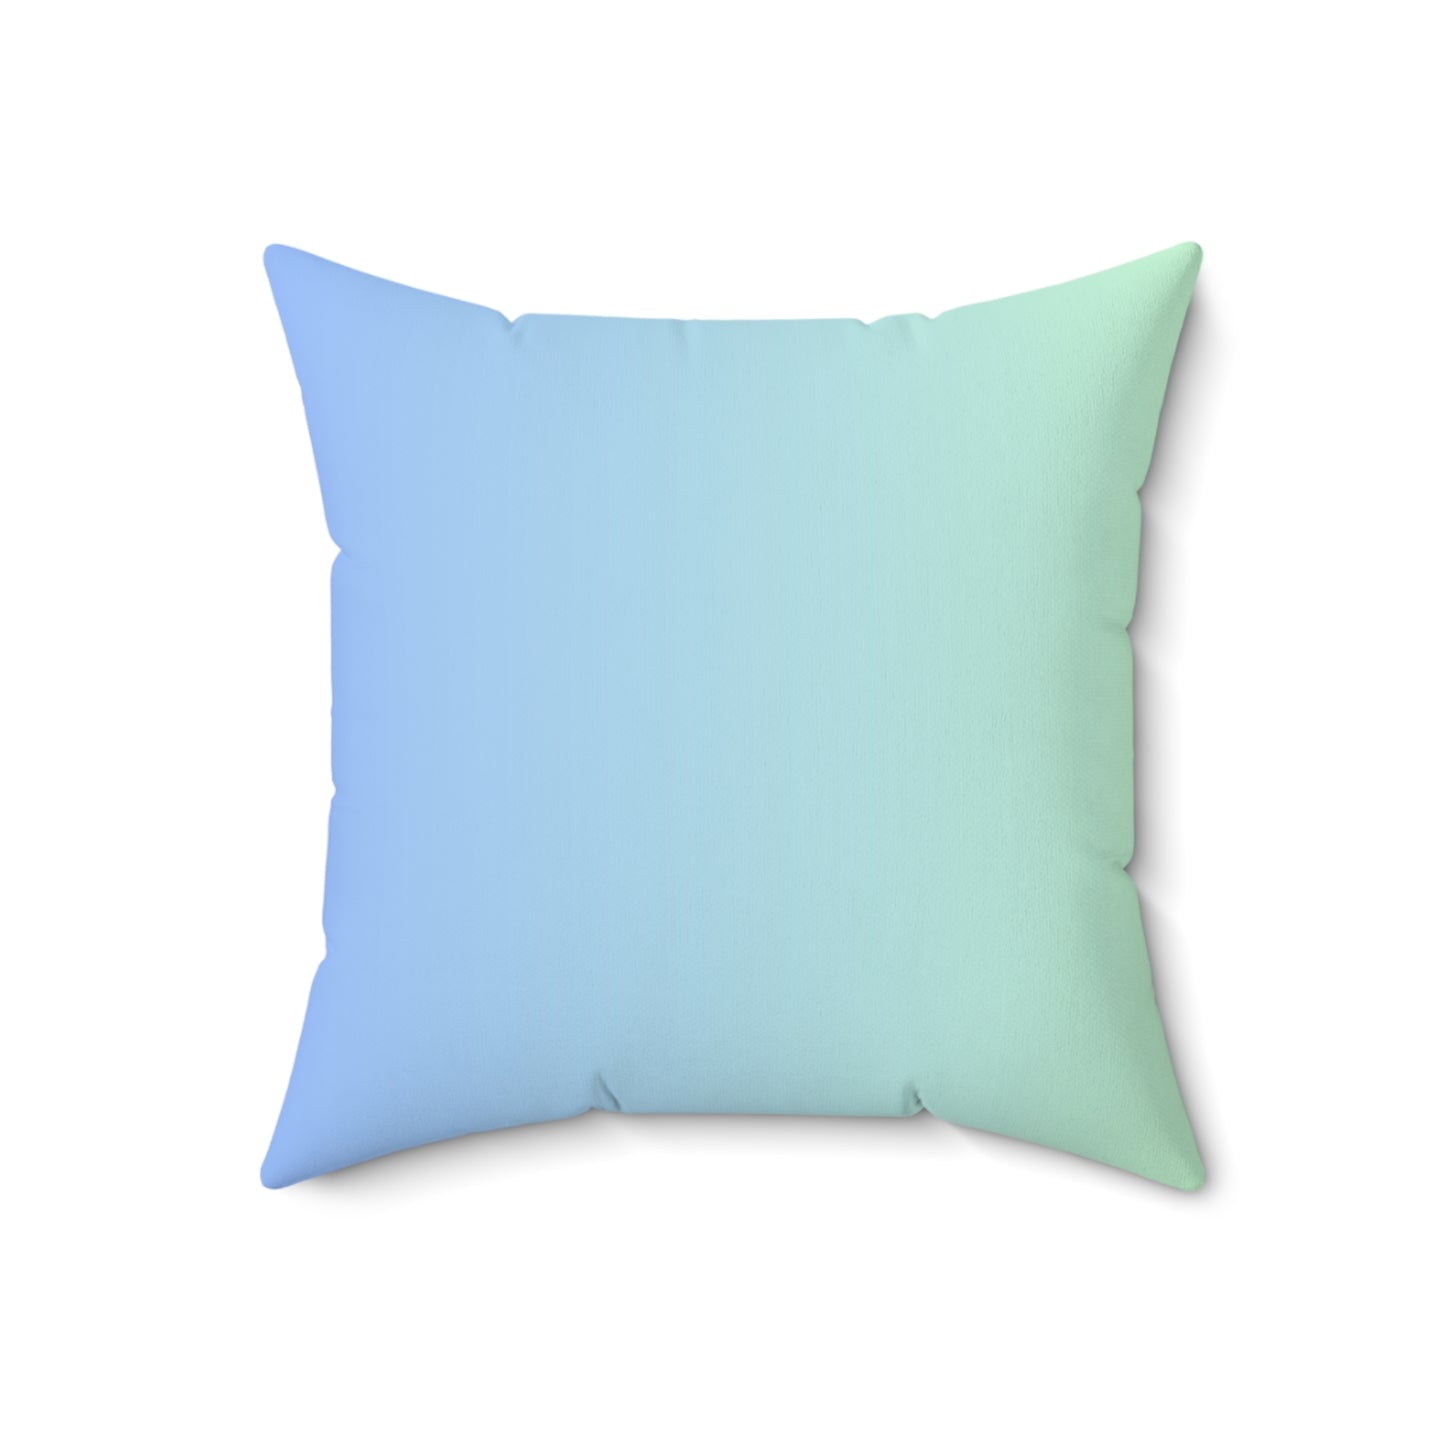 Animal Print (Dual) - Blue-Green Ombre' Throw Pillow